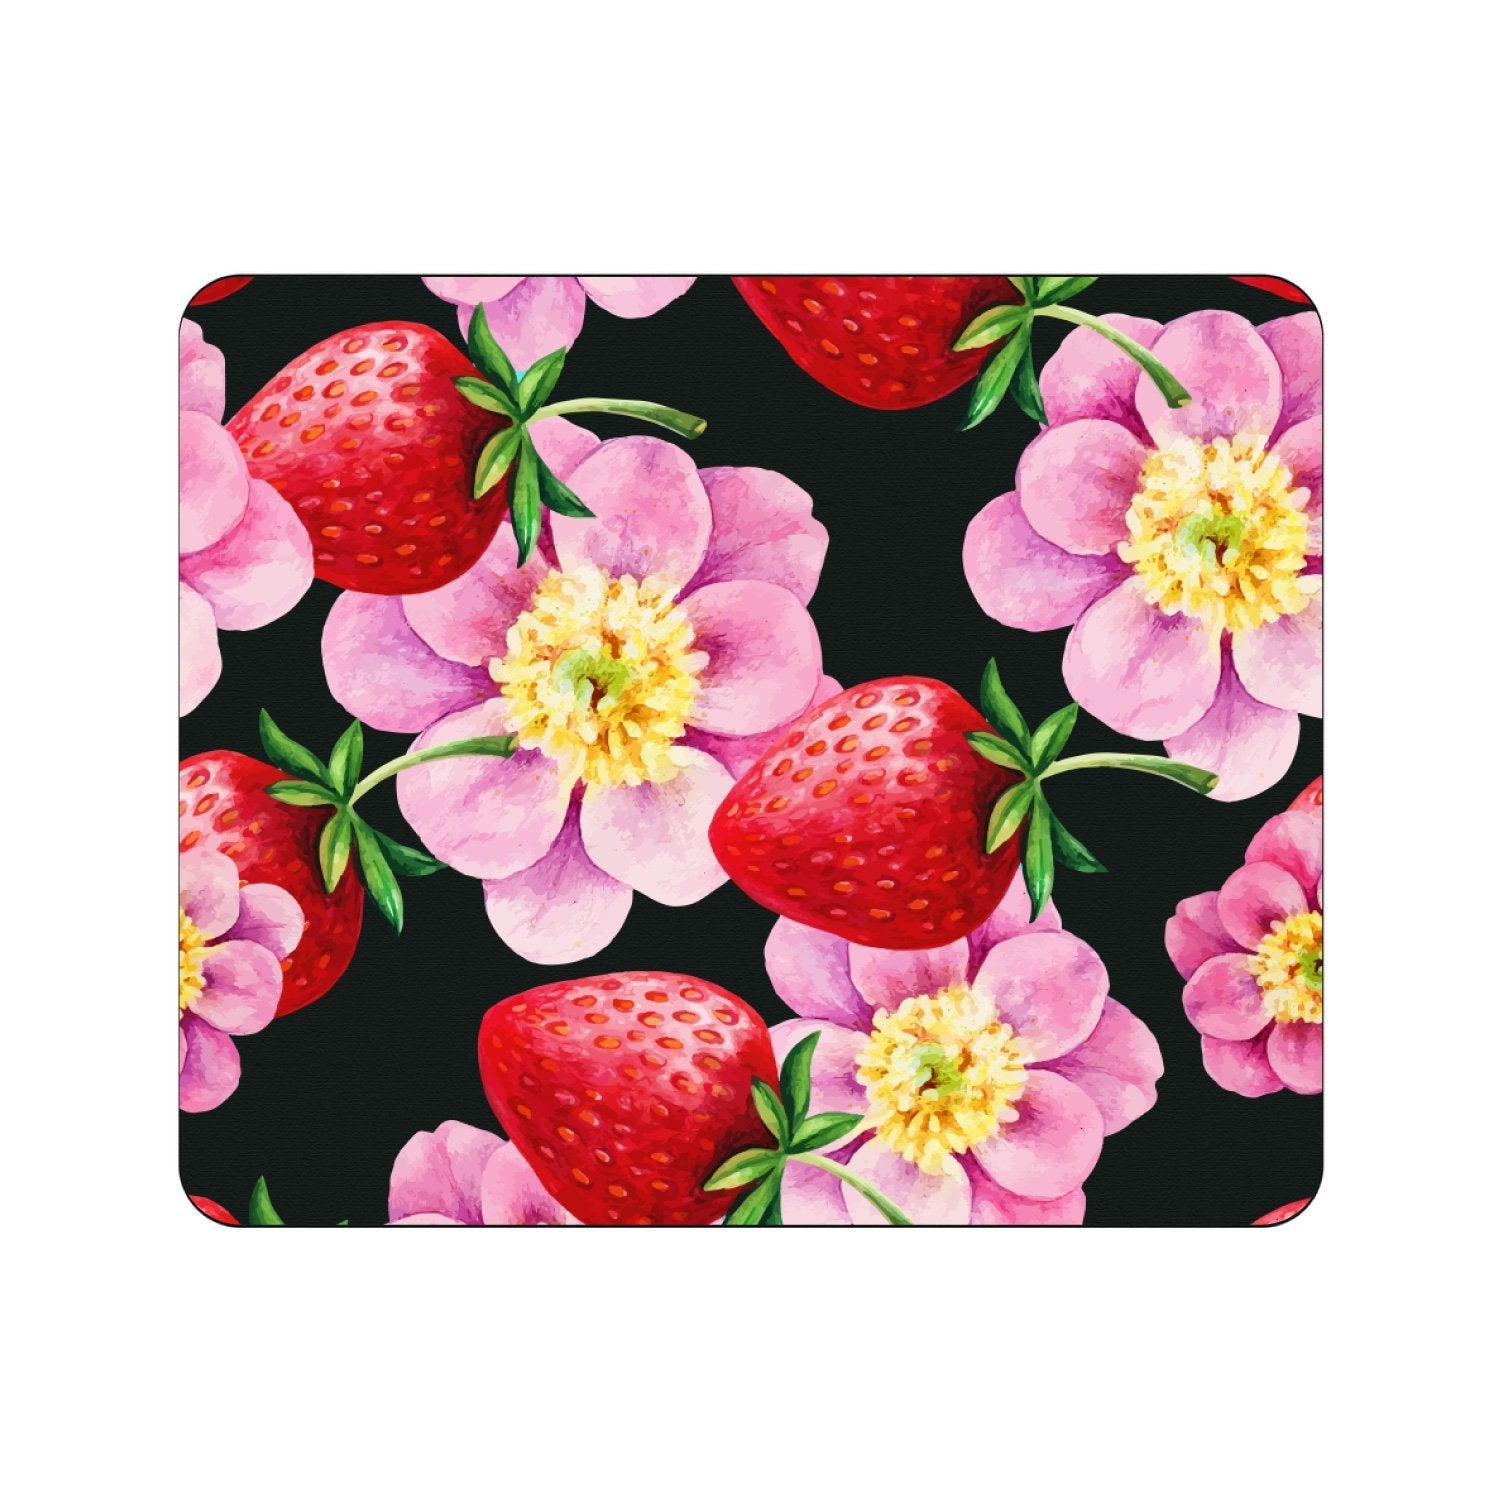 OTM Prints Series Mousepad, Strawberry Flowers